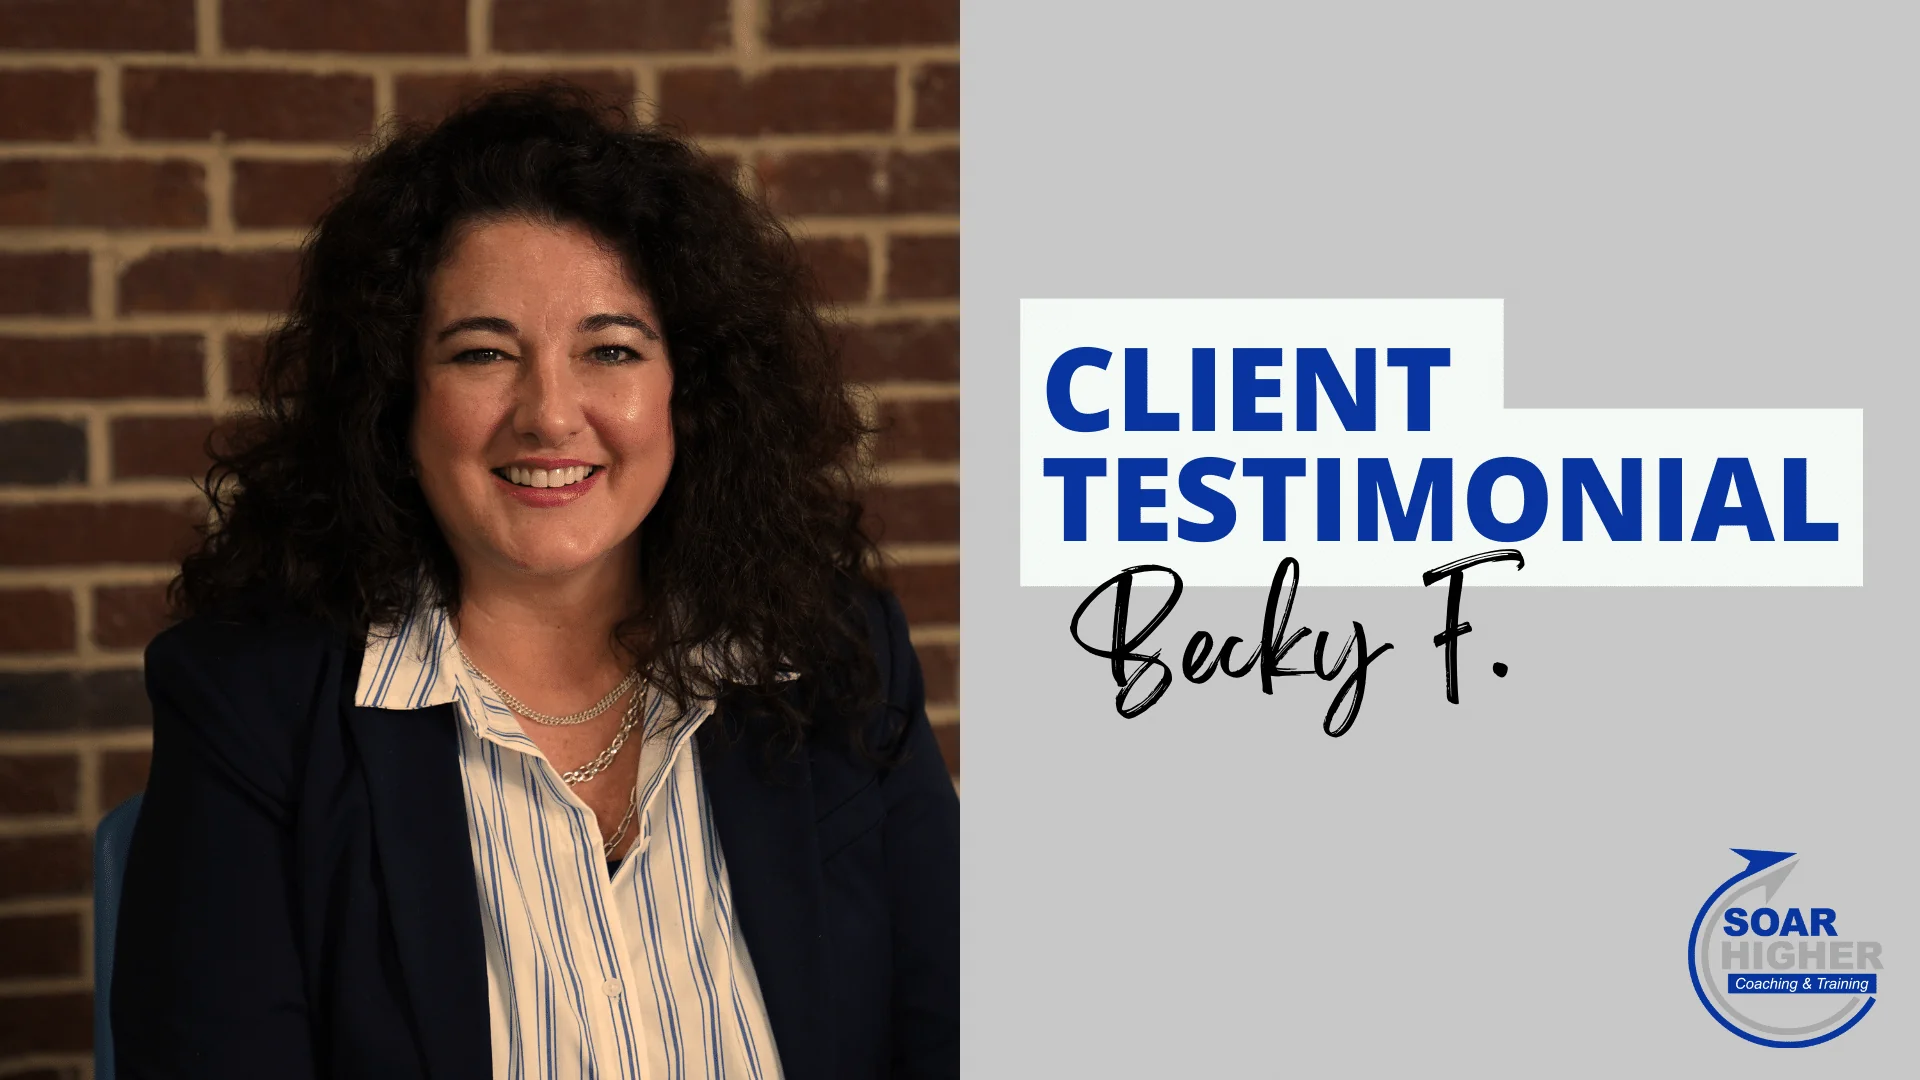 Becky F. Testimonial Card